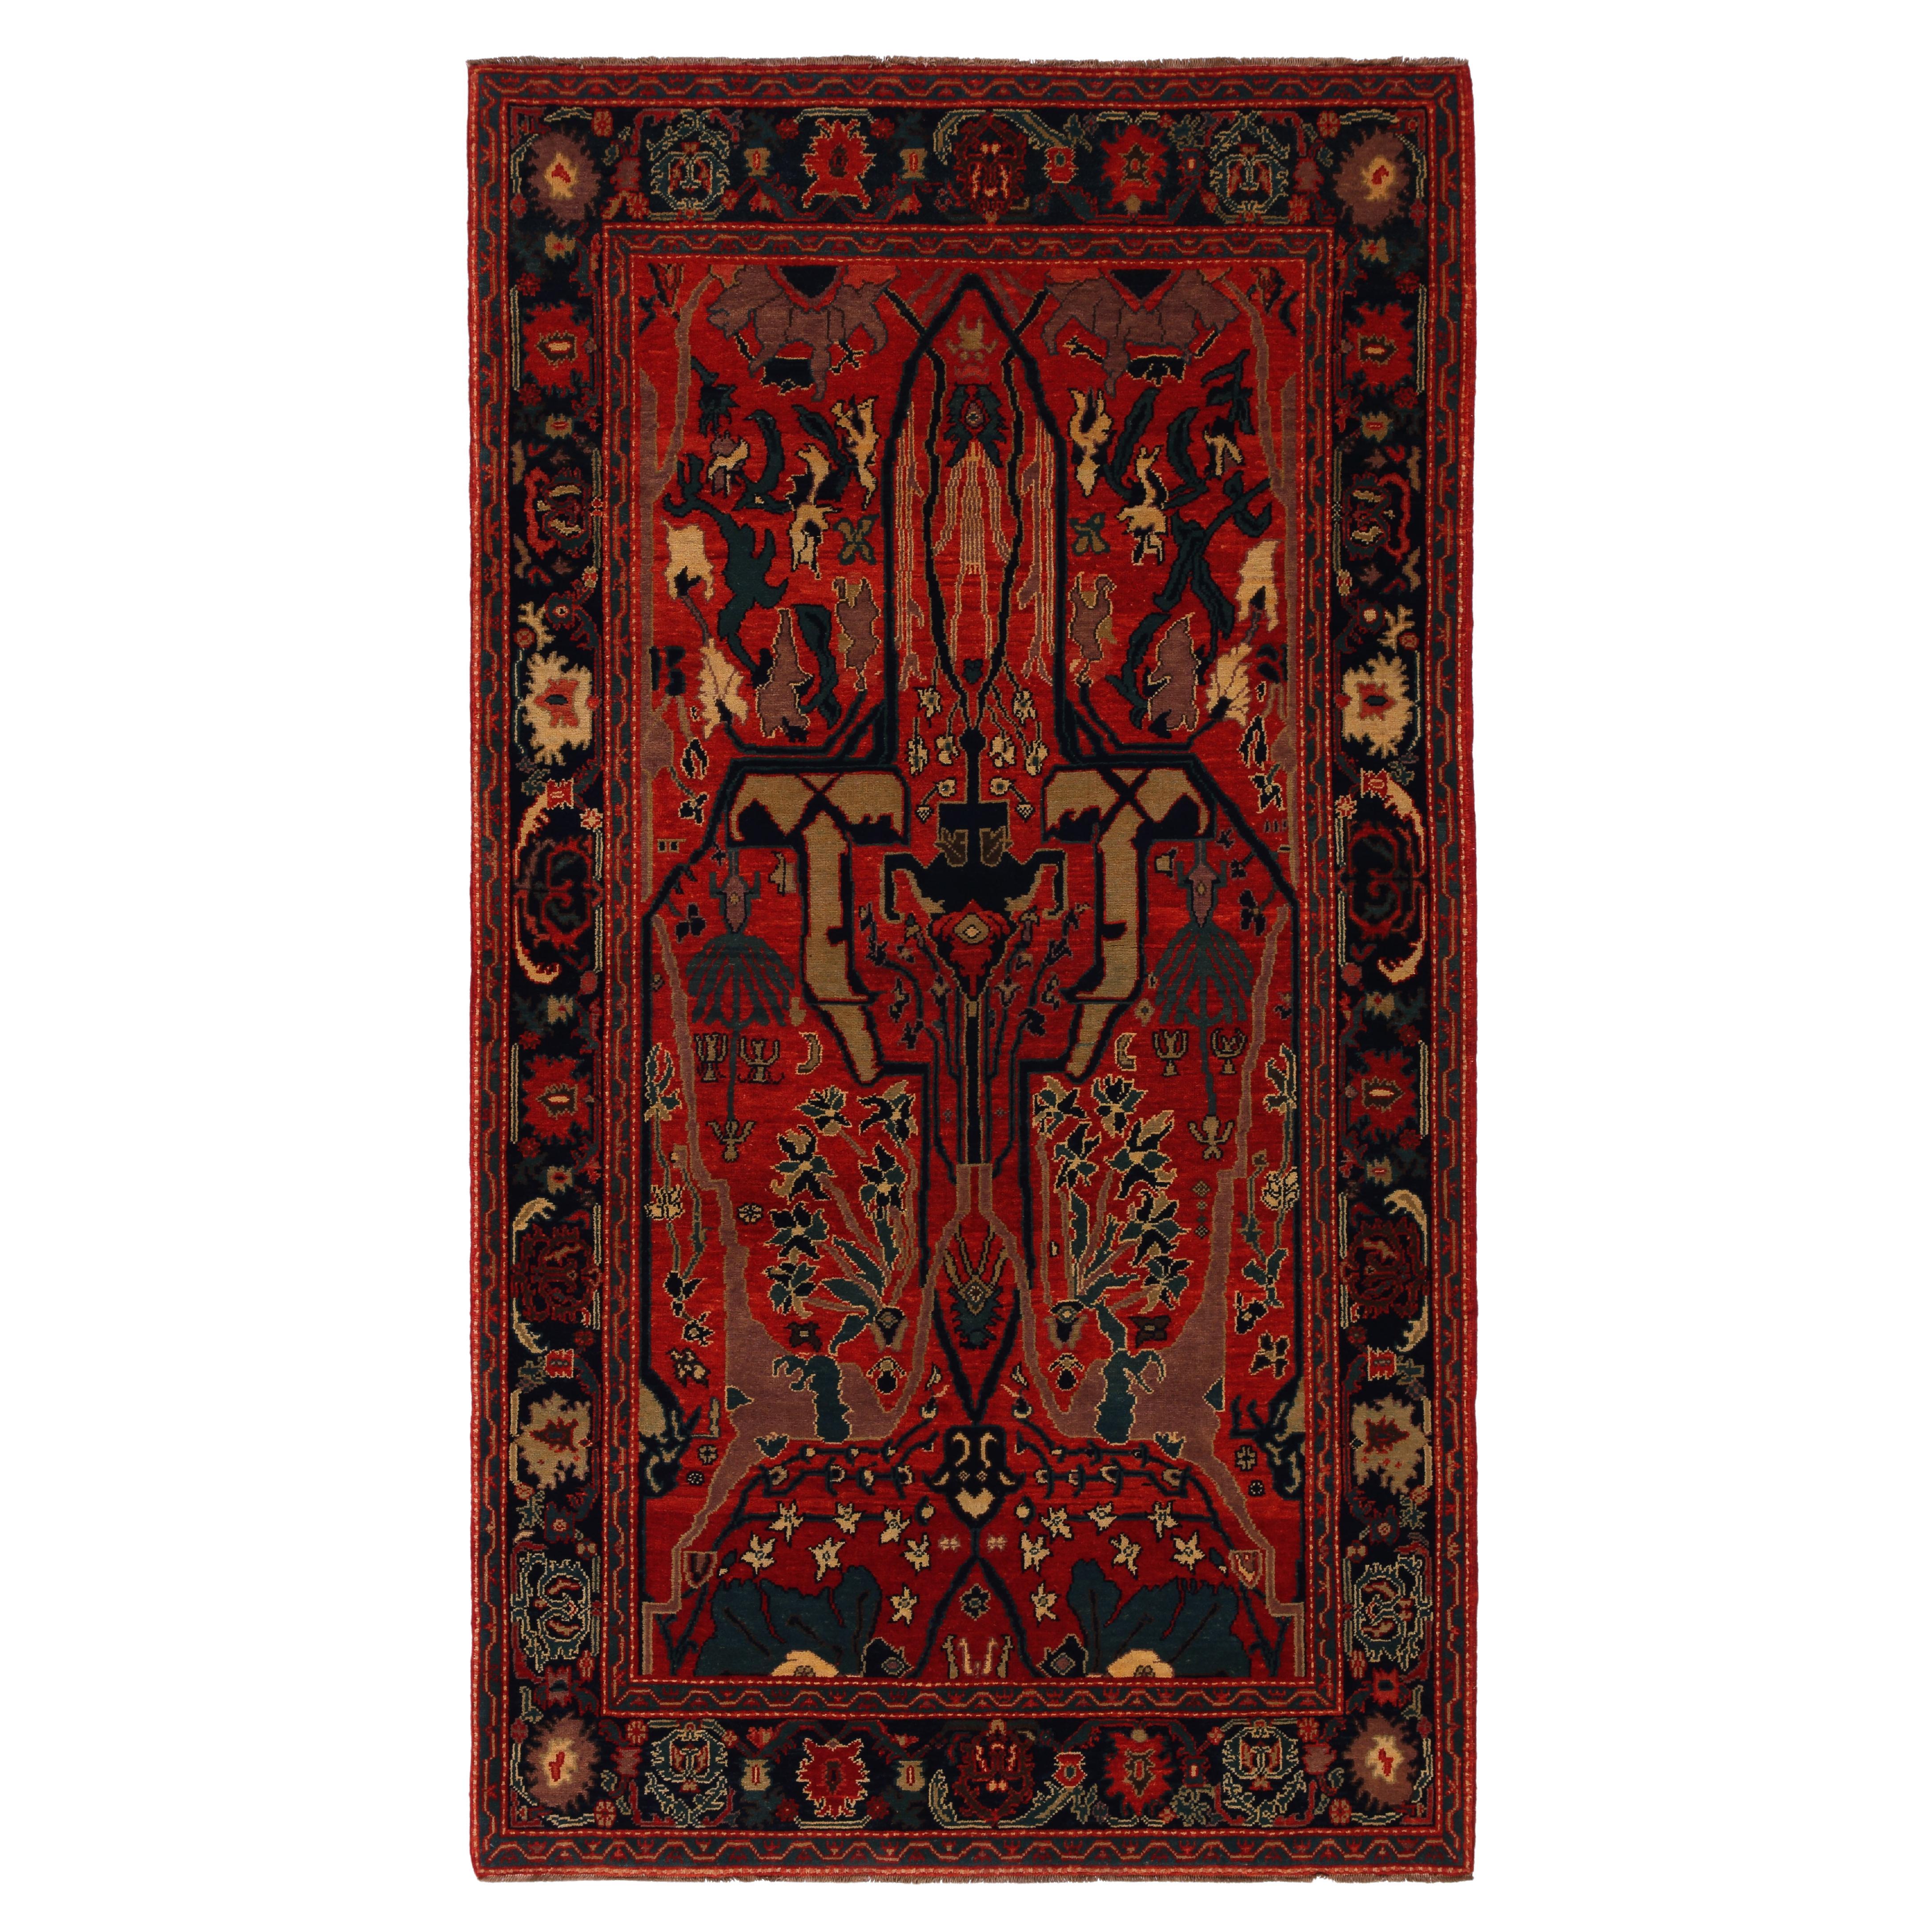 Ararat Rugs Gerous Arabesque Rug, 19th C. Persian Revival Carpet Natural Dyed For Sale